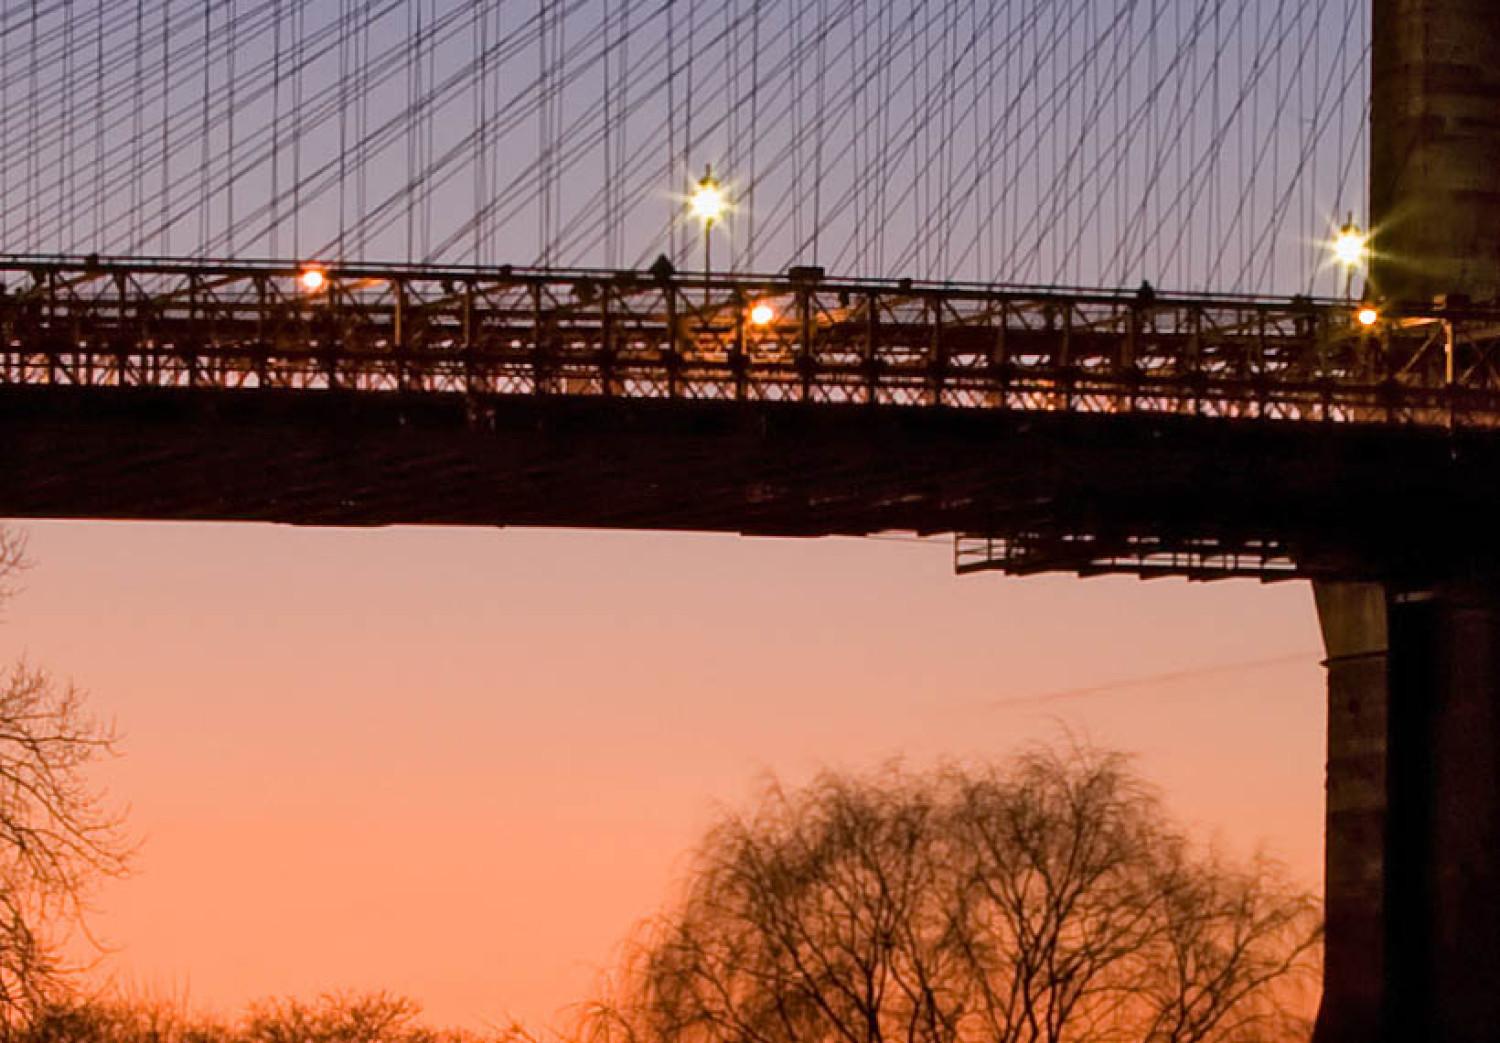 Canvas Brooklyn Bridge - panorama